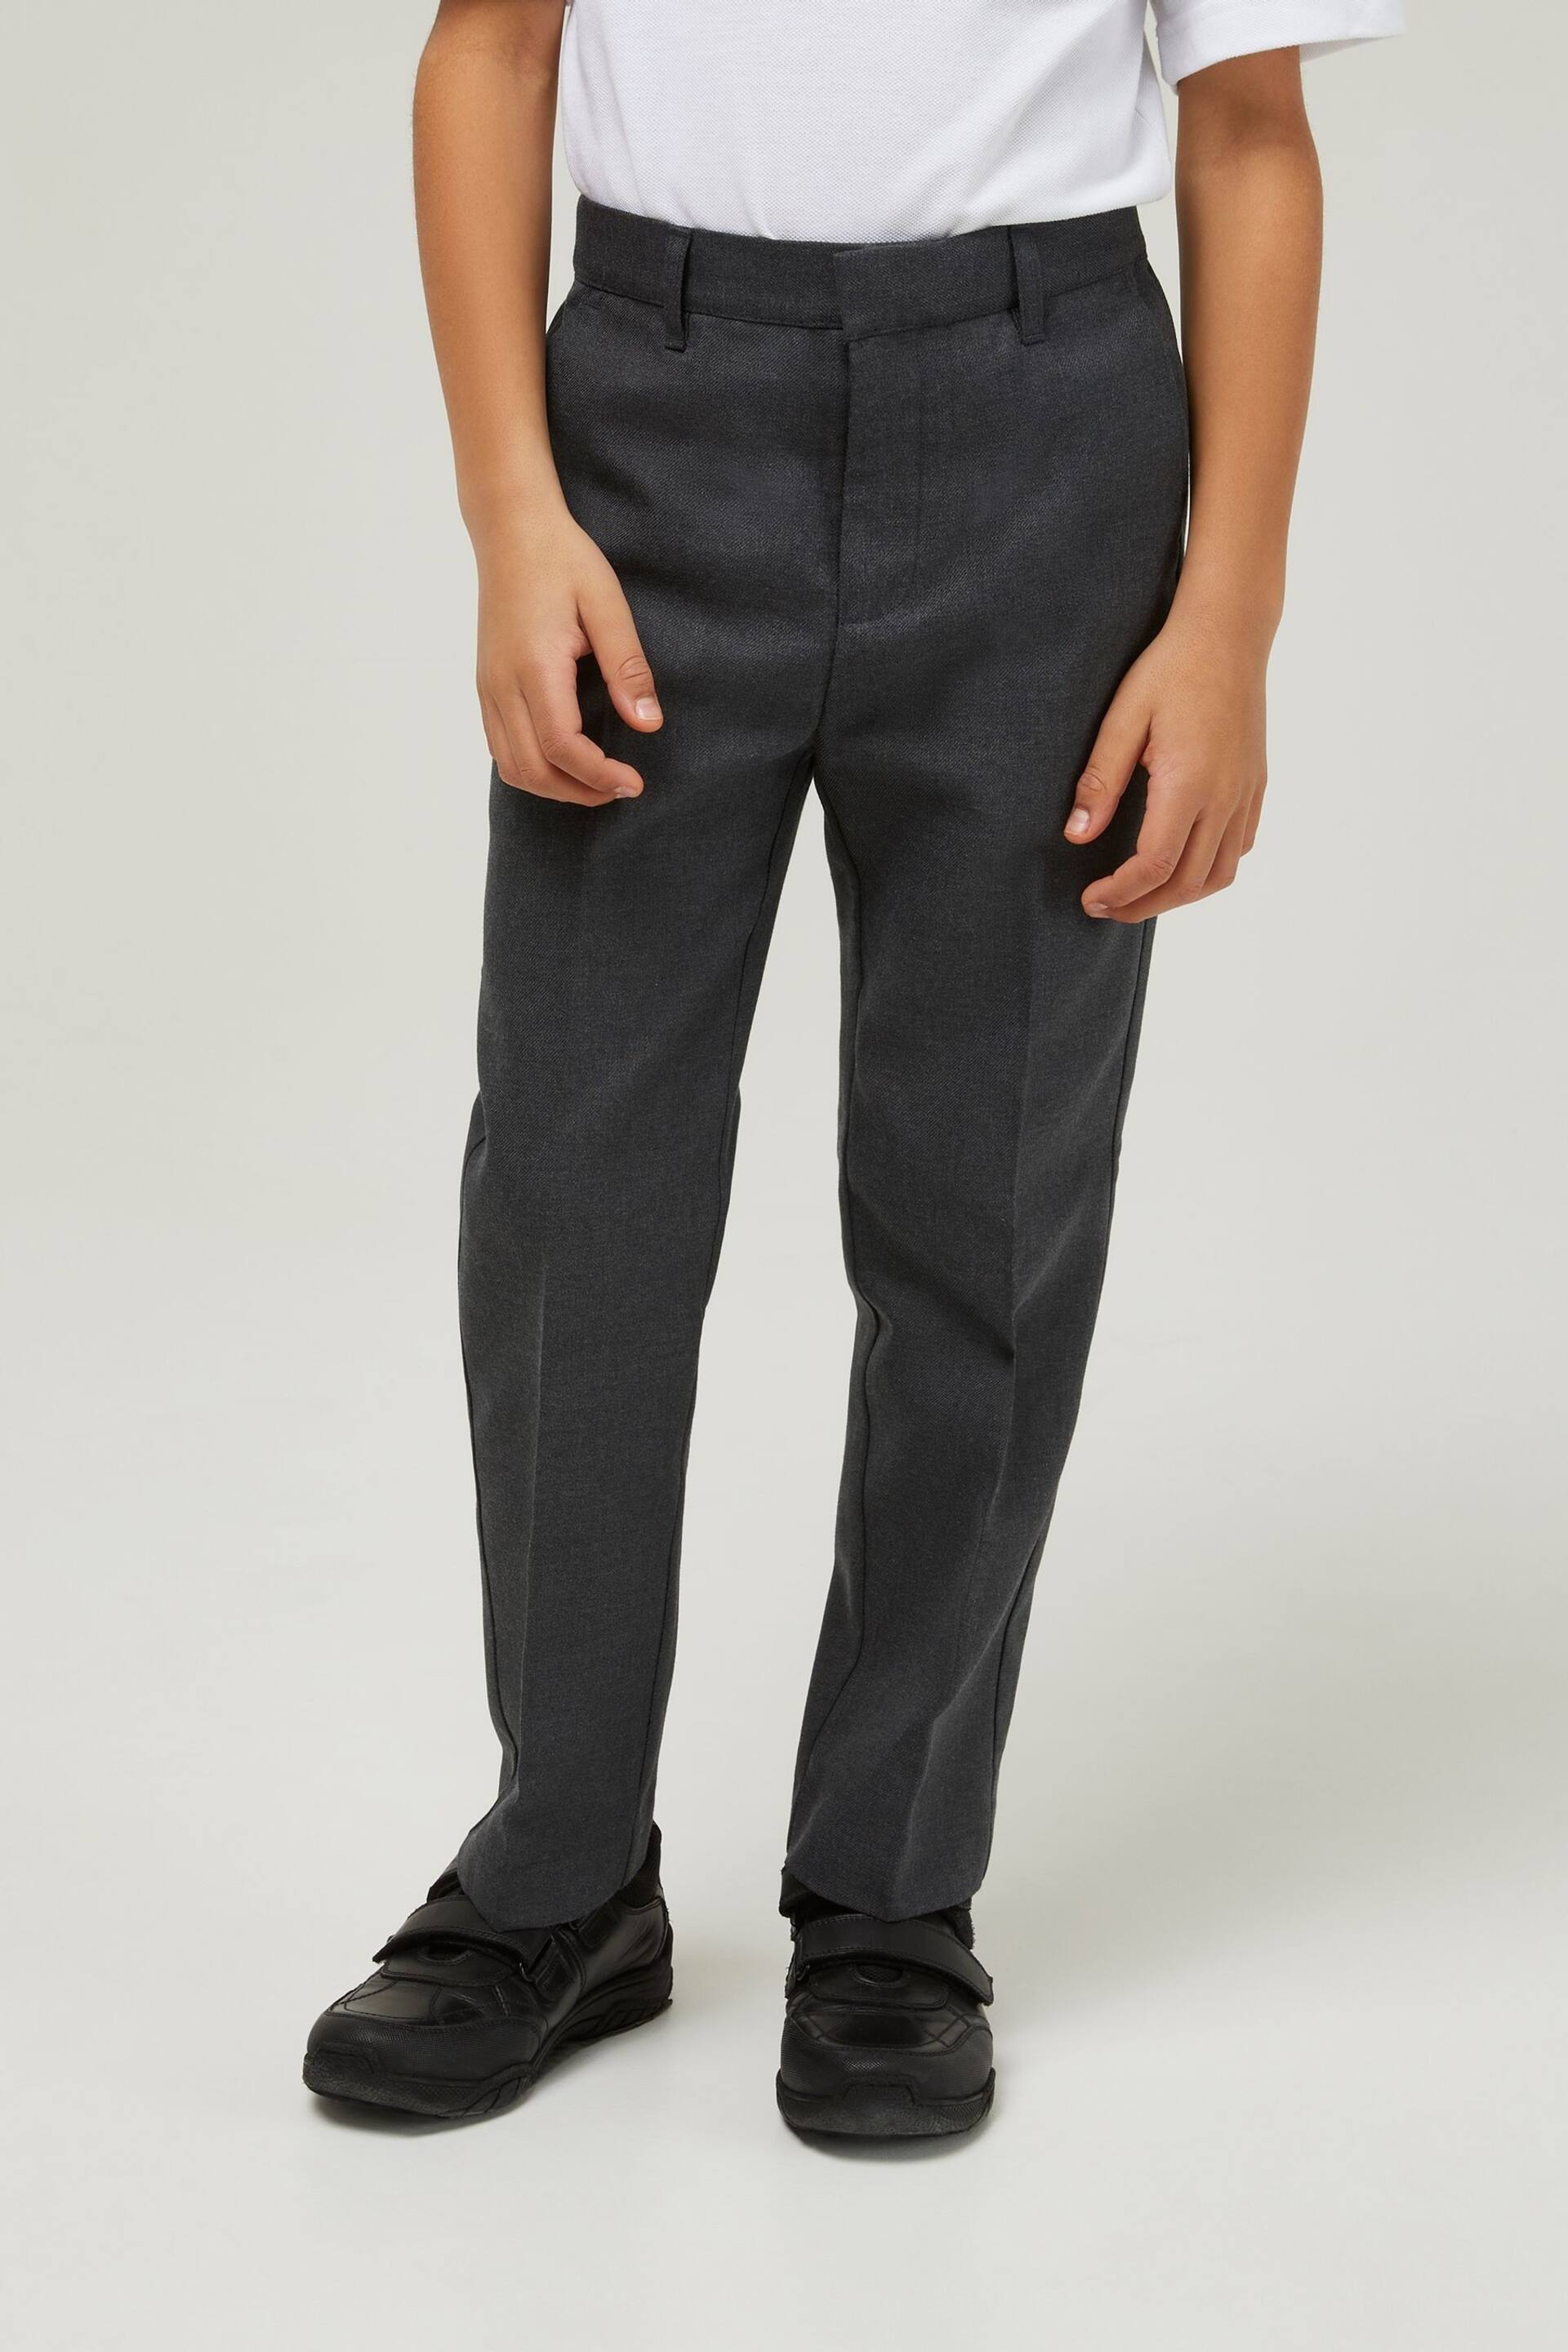 Trutex Junior Boys Regular Fit Grey School Trousers - Image 3 of 5